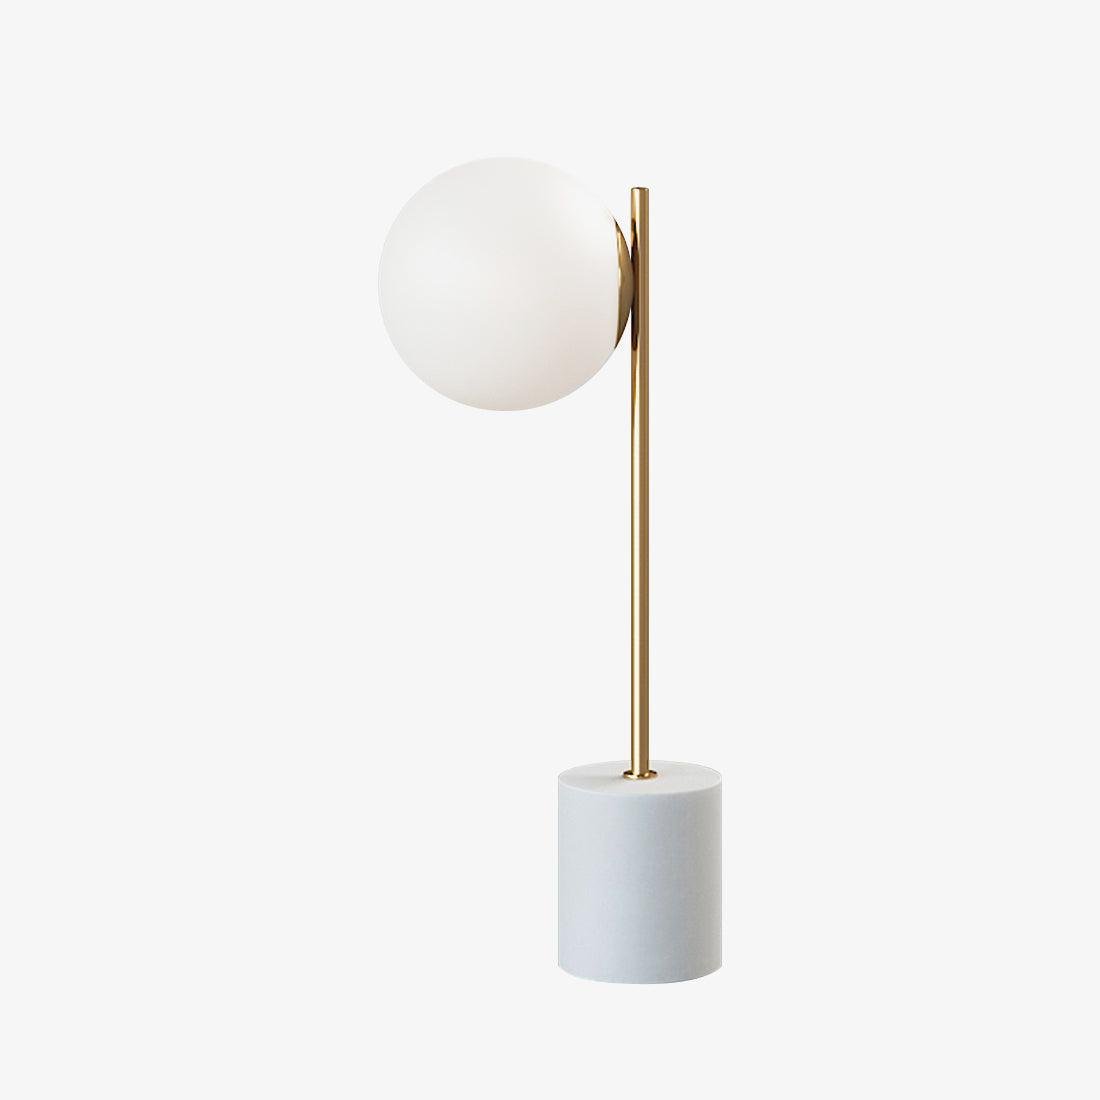 Sphere & Stem Table Lamp ∅ 8.7″ x H 22.8″ , Dia 22cm x H 58cm , Gold+White , EU plug